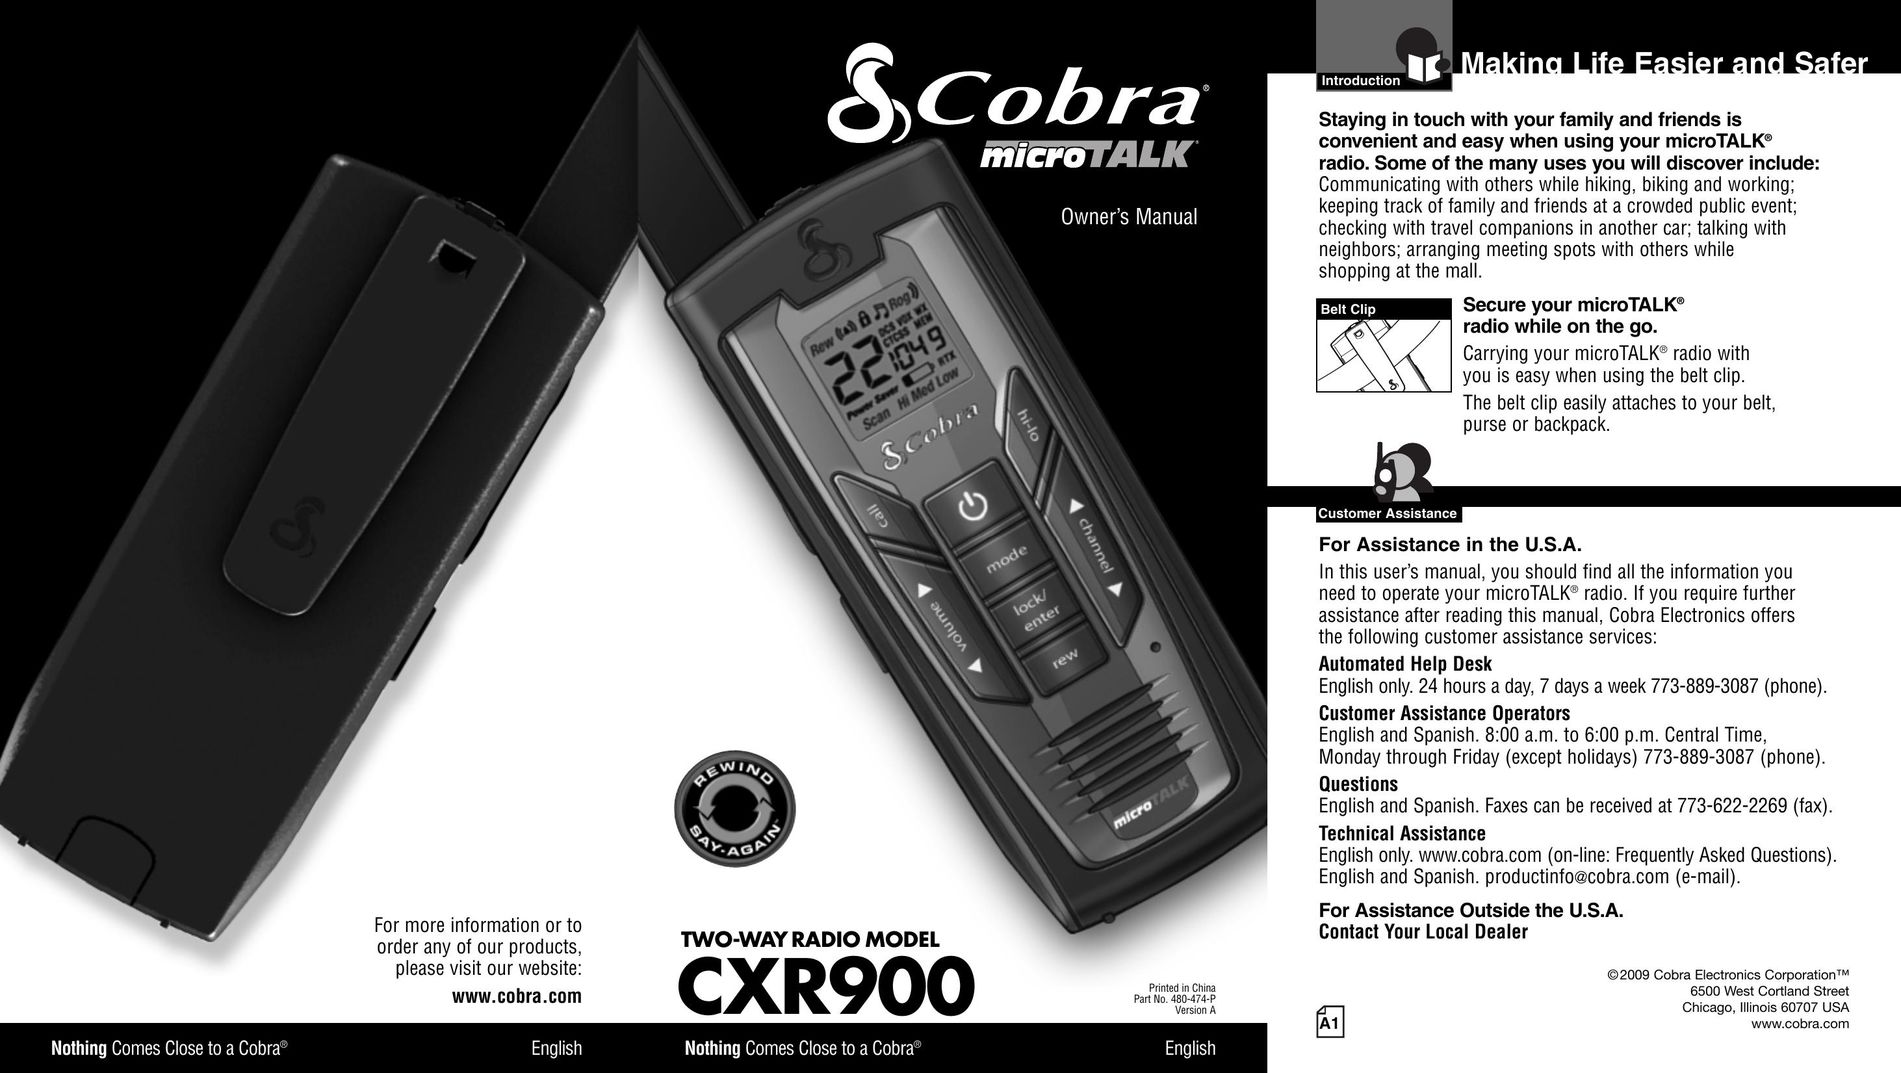 Cobra Electronics CXR900 Two-Way Radio User Manual